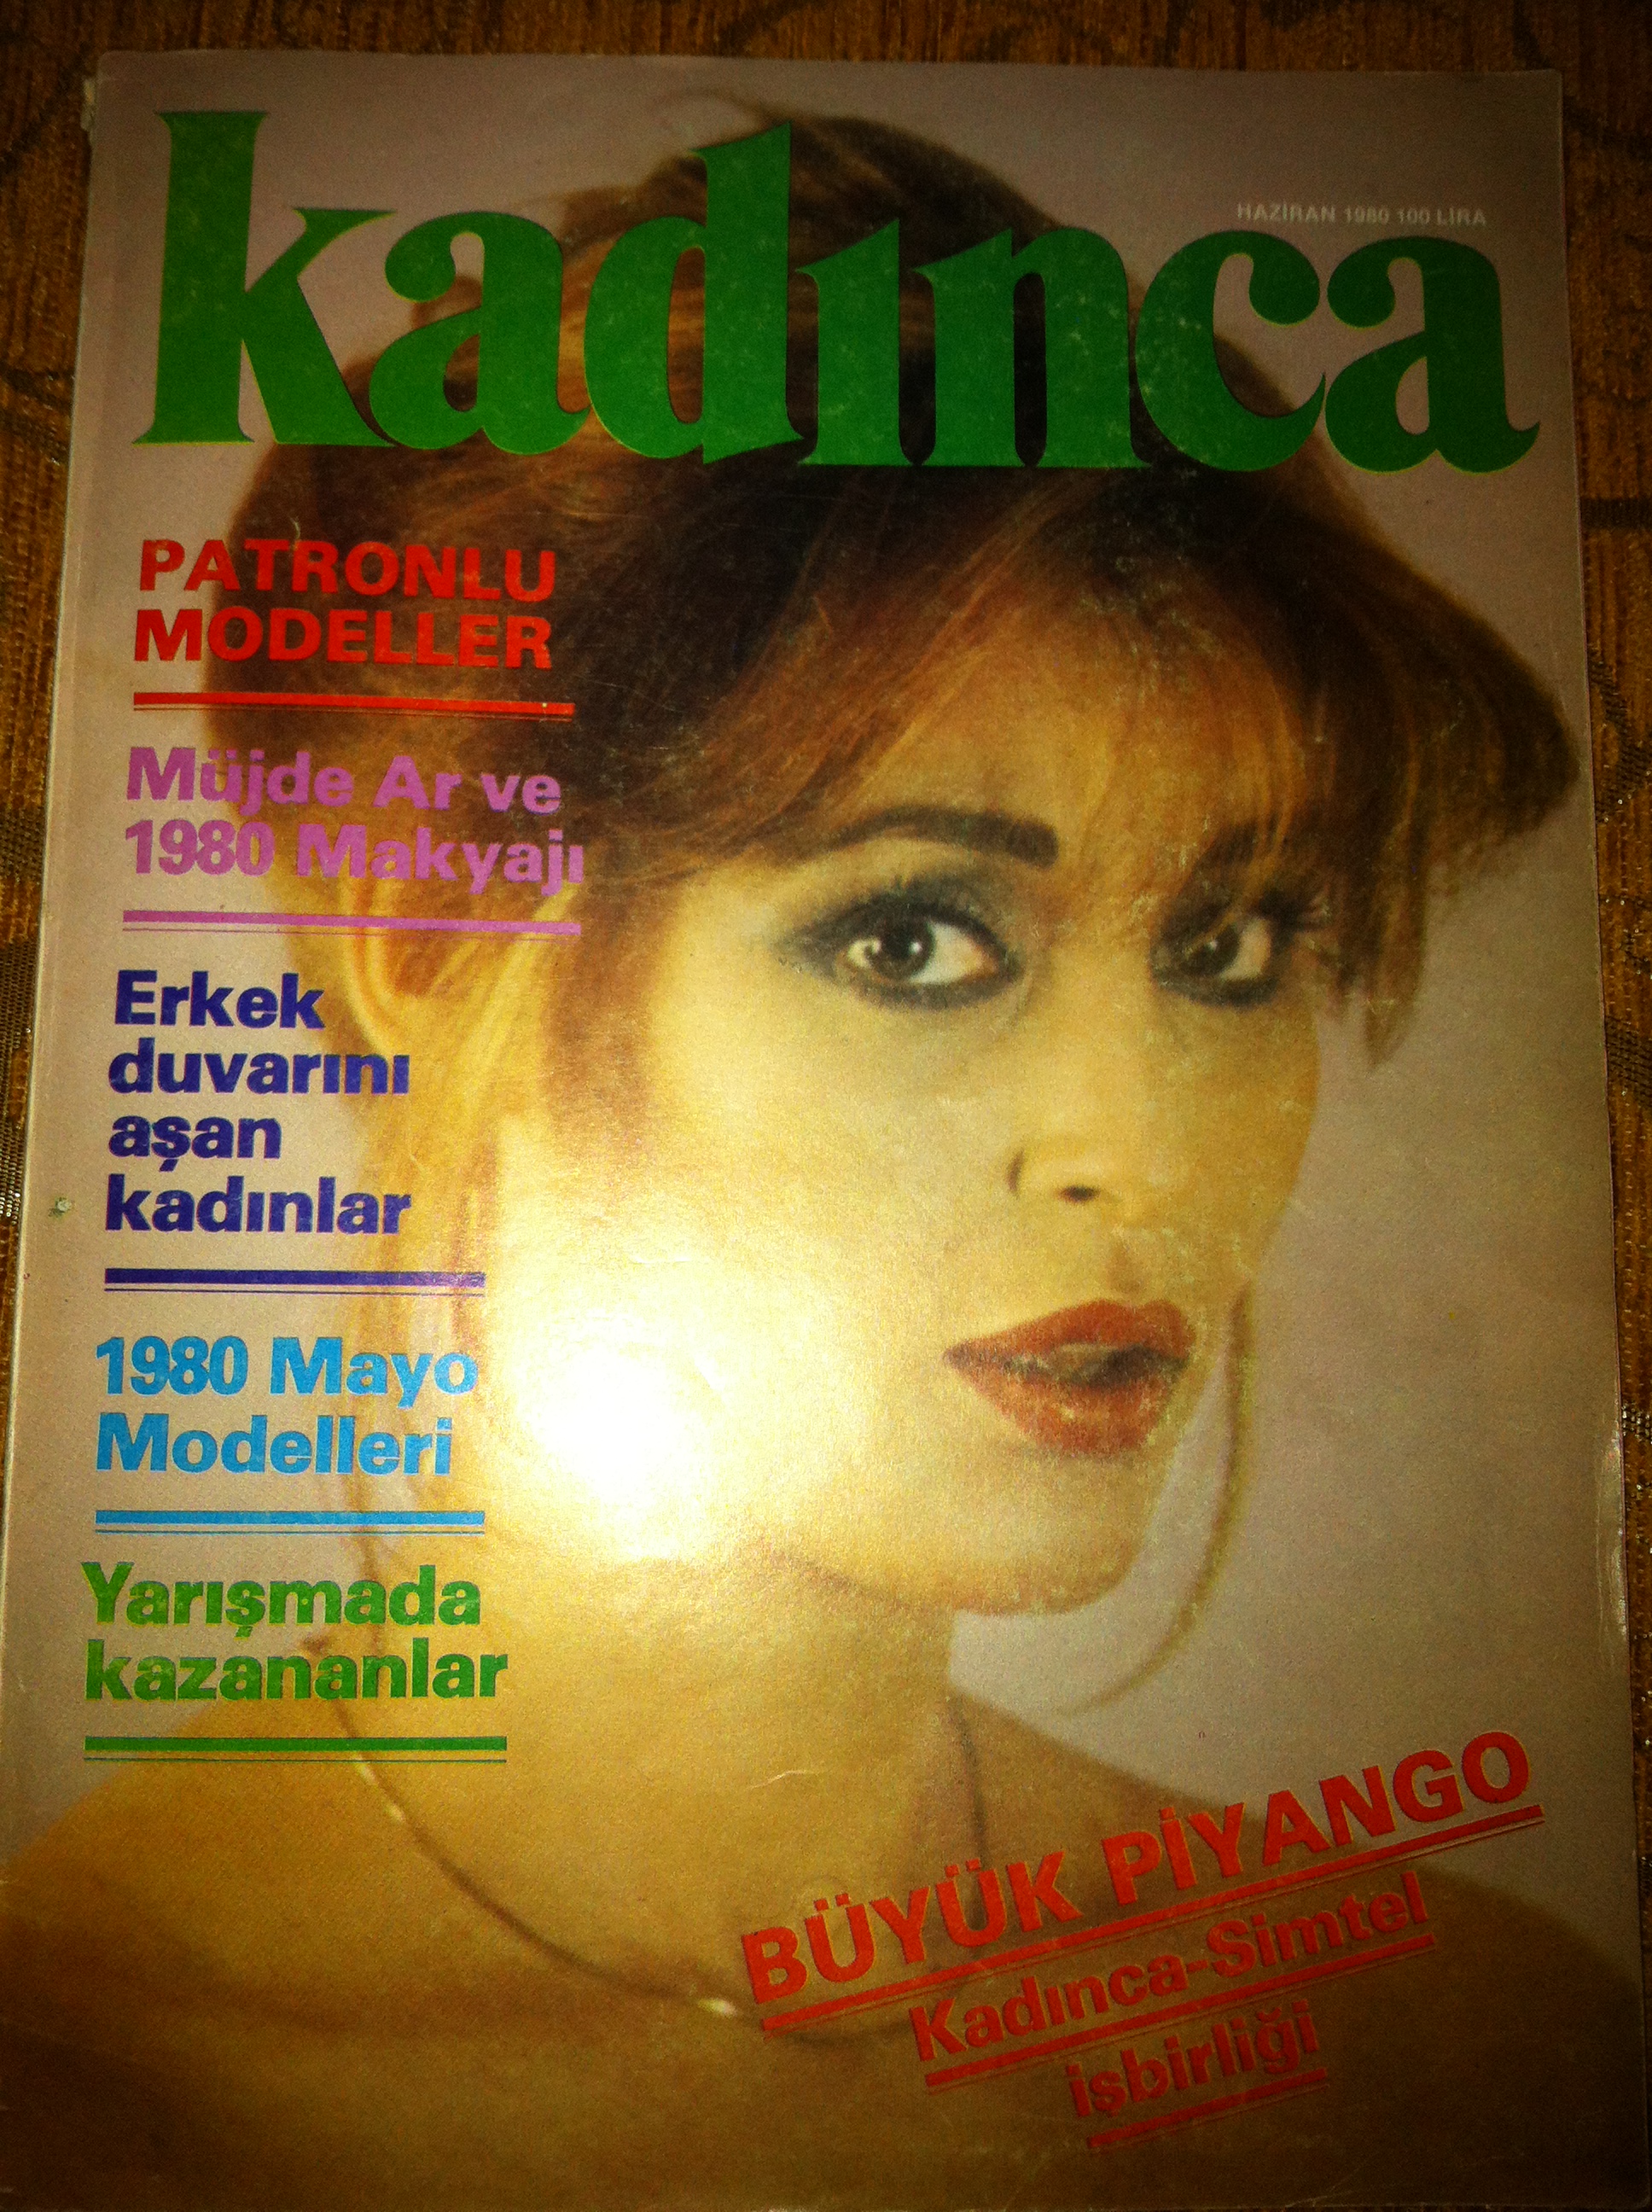 Kadınca Dergisi Haziran 1980, 100 Lira